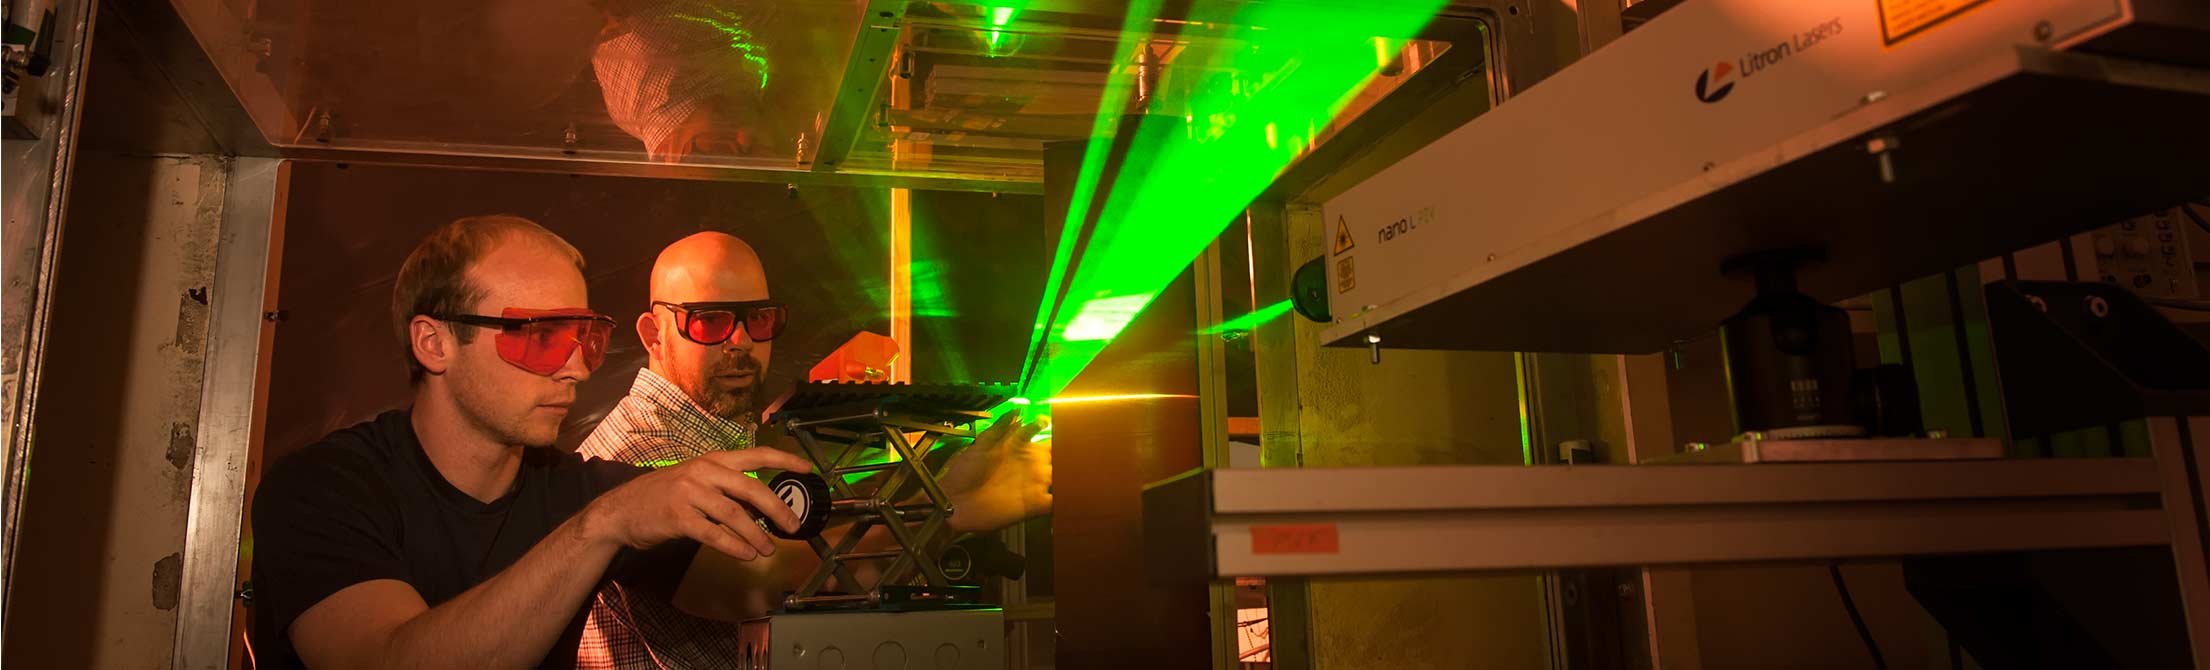 Men adjust laser in wind tunnel